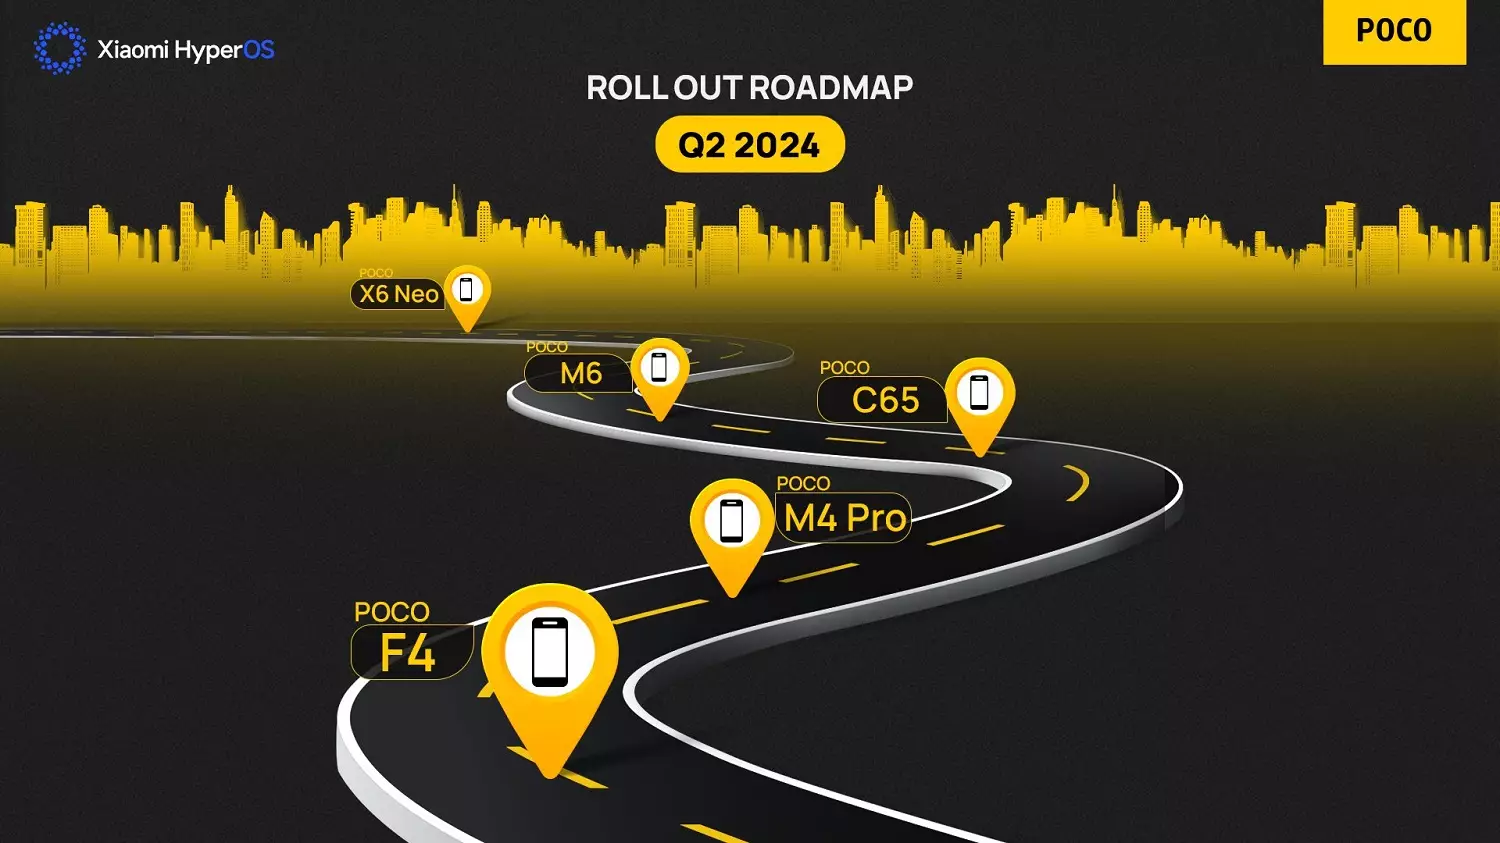 Xiaomi HyperOS POCO devices Q2 2024 RoadMap.